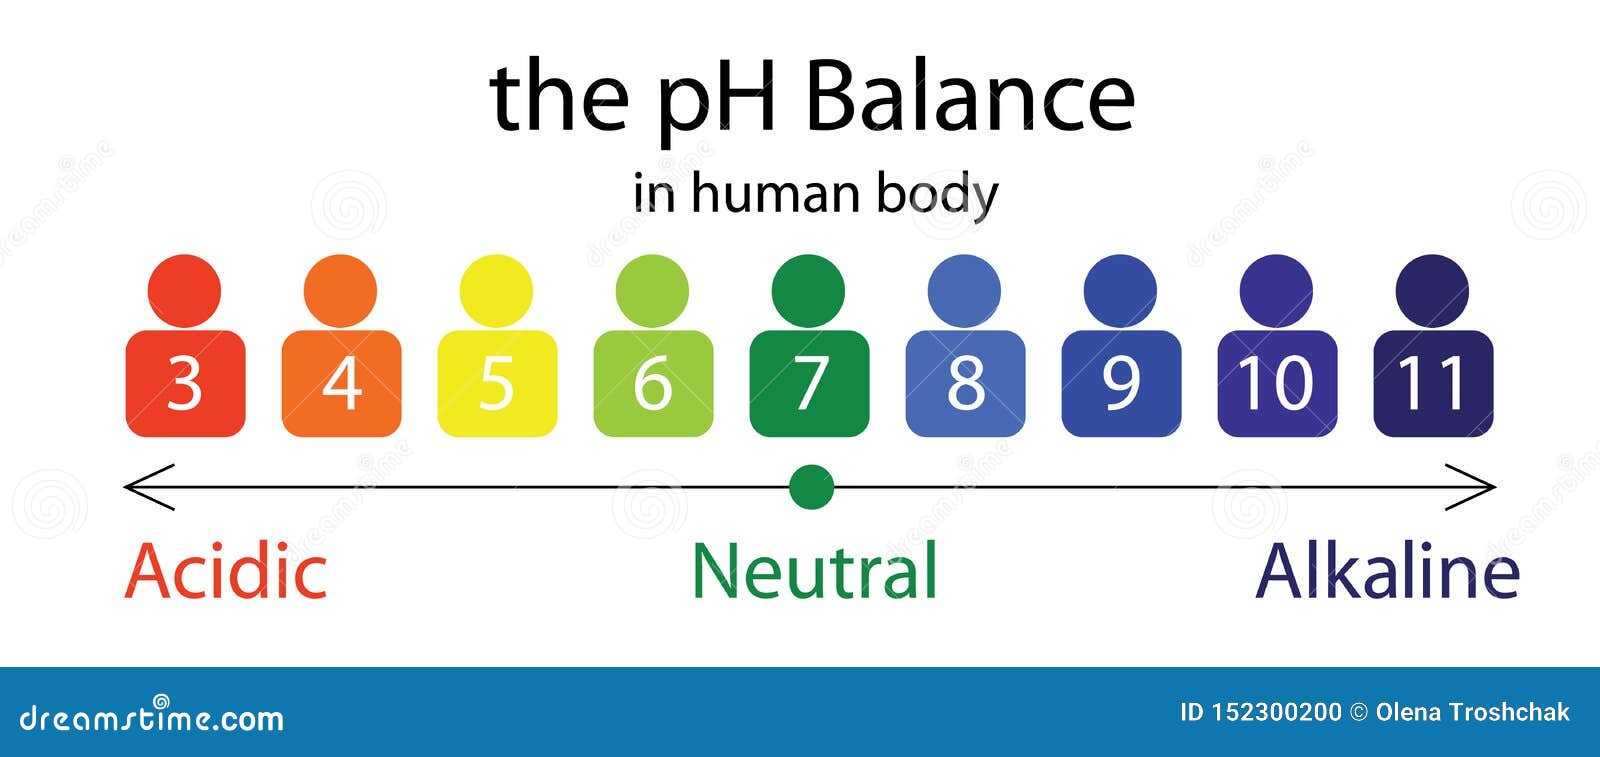 Ph Balance In Human Body